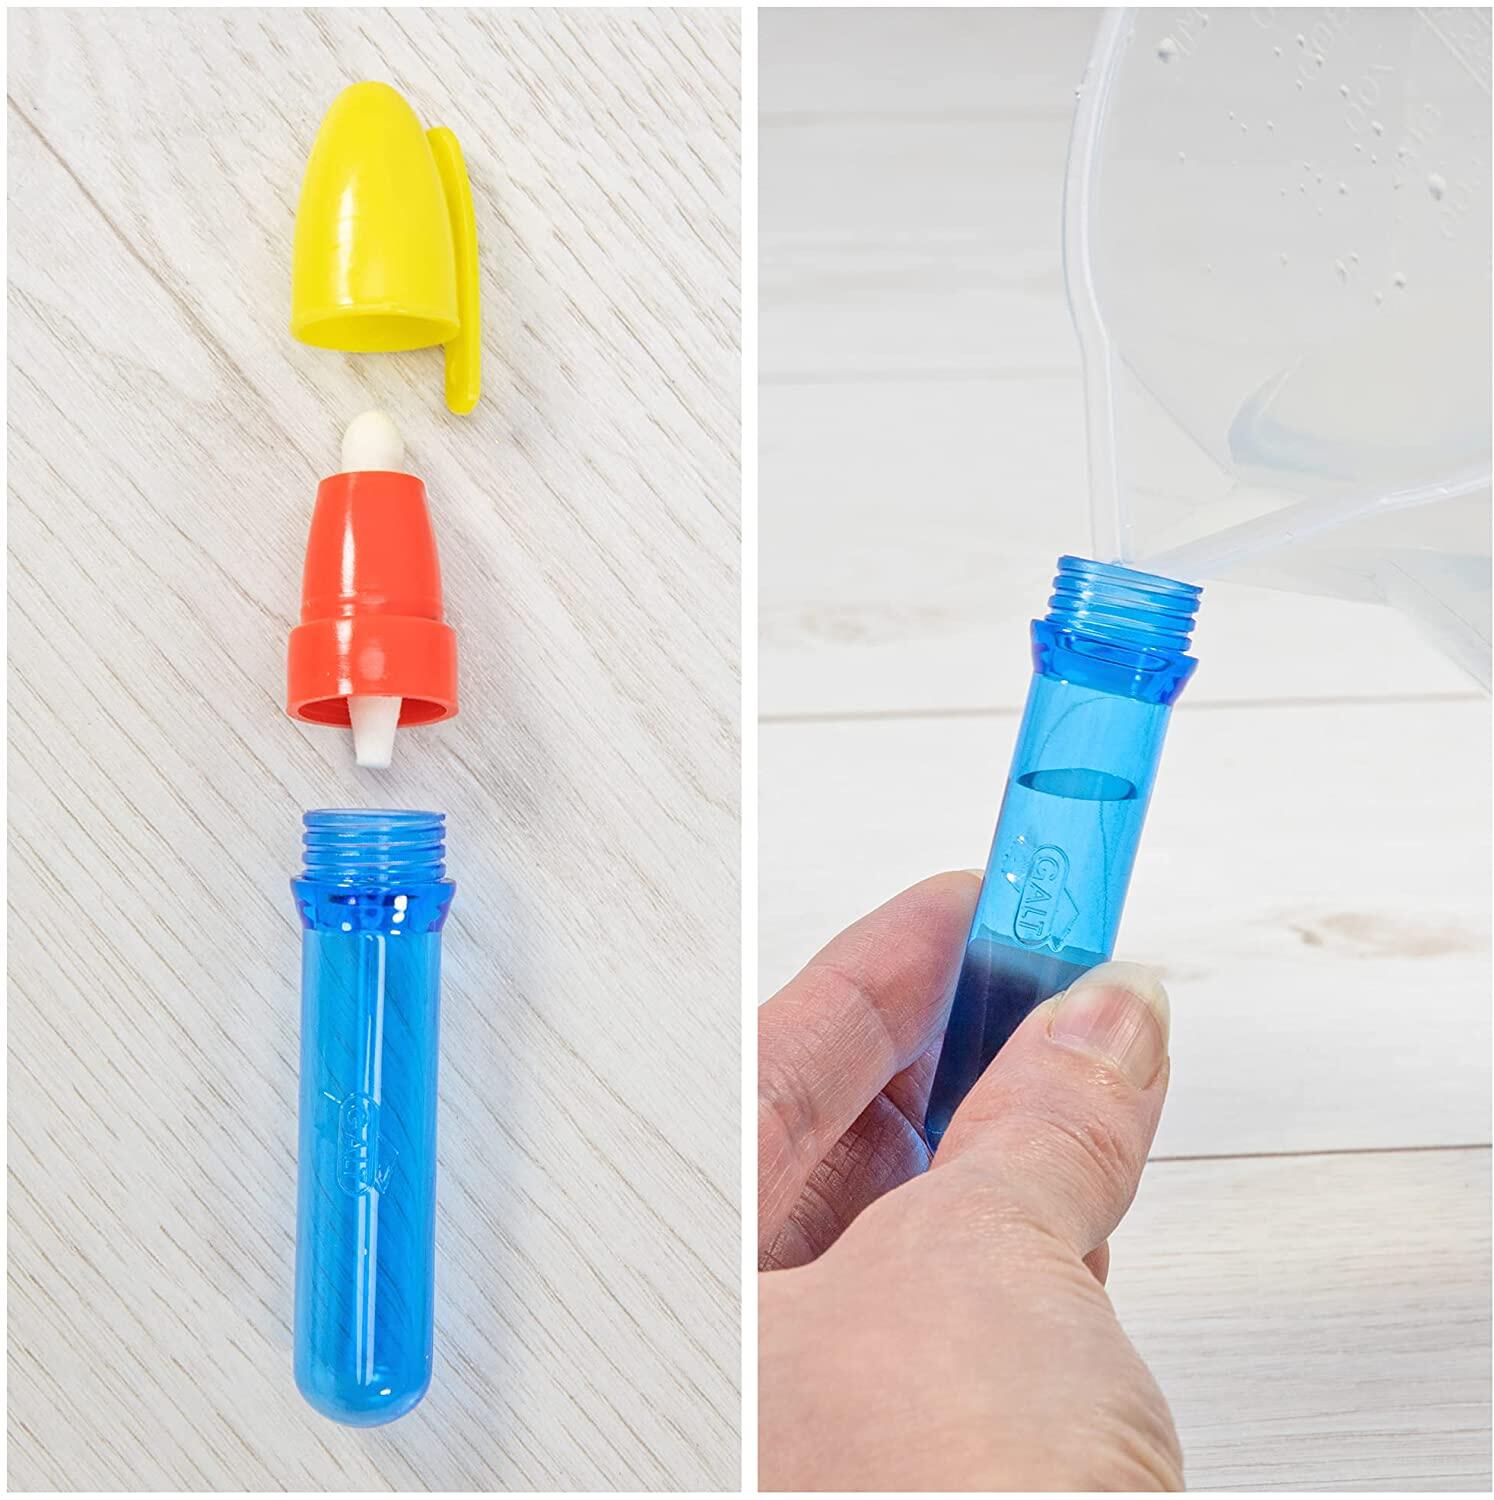 Water Magic: Carte de colorat Who's Hiding? PlayLearn Toys